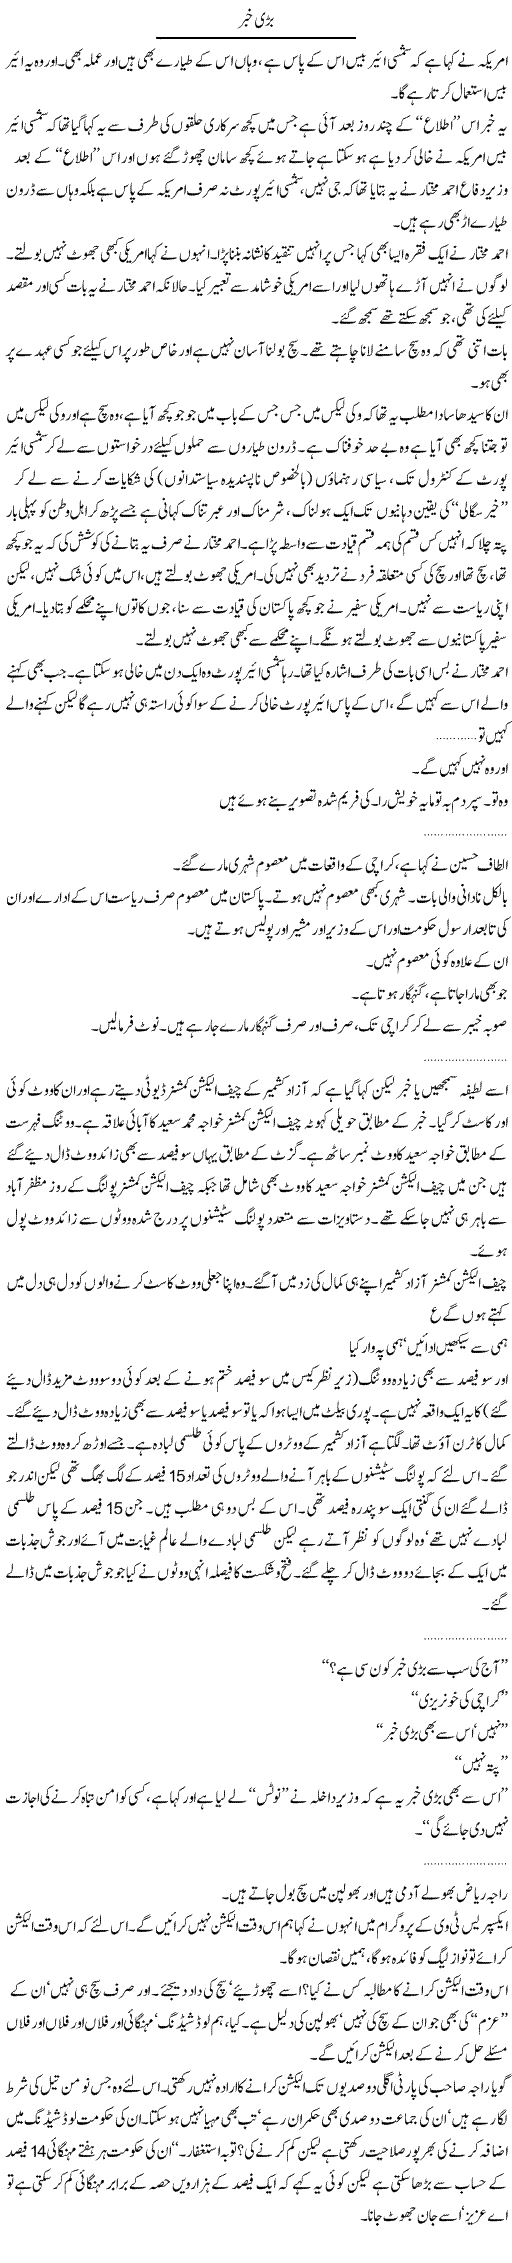 America and Pakistan Express Column Abdullah Tariq 9 July 2011